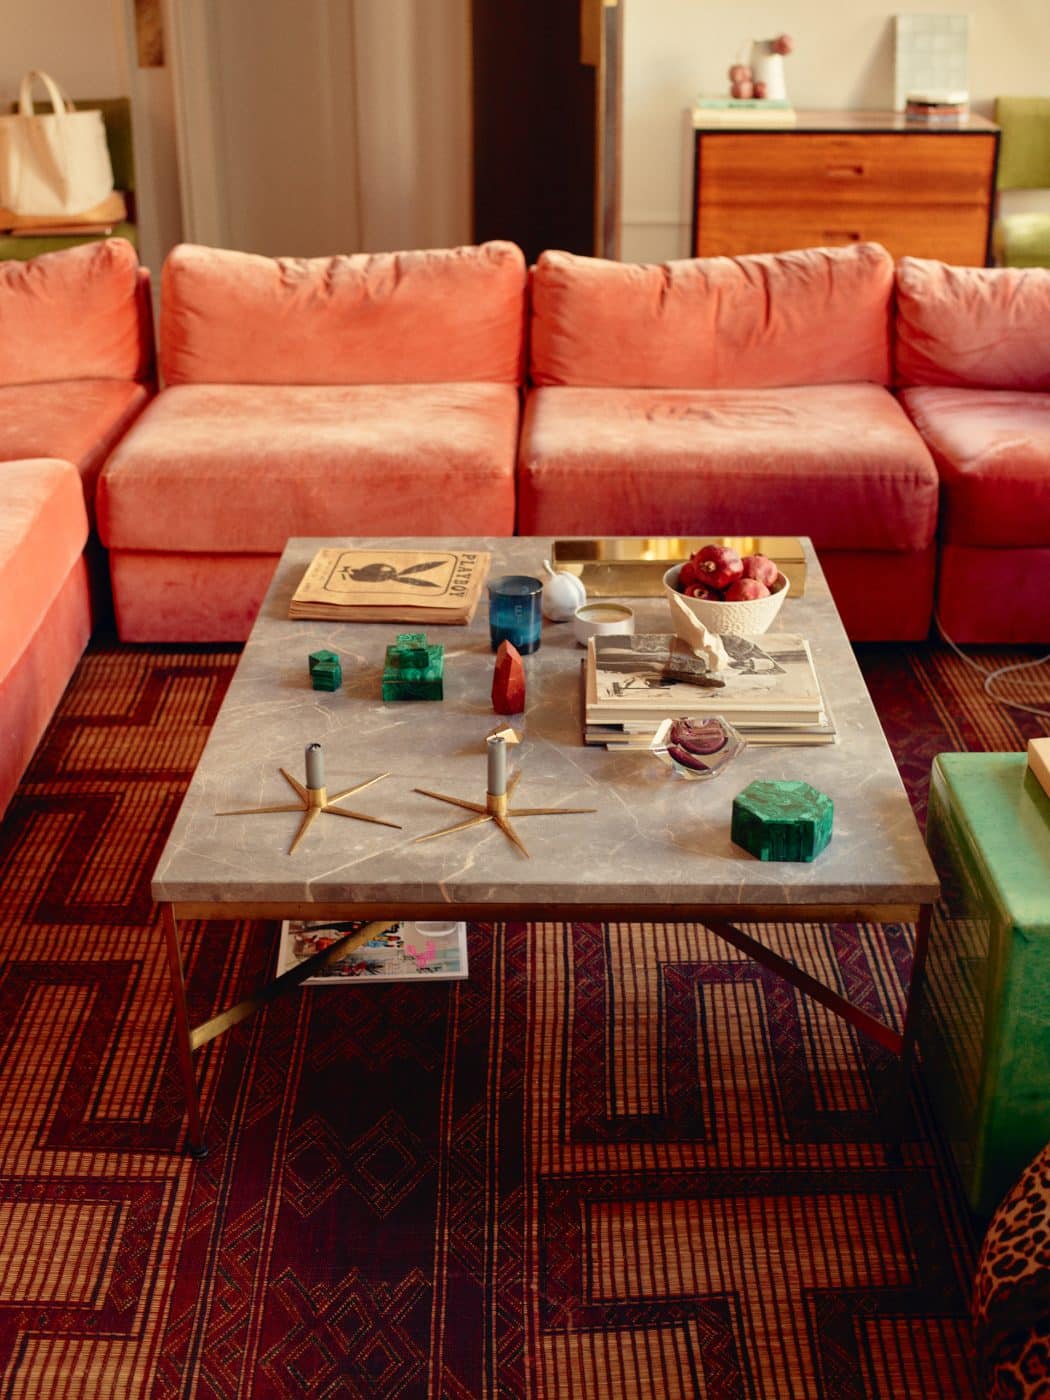 The Paul McCobb coffee table and pink Milo Baughman sectional sofa in Jenna Lyons' Soho loft